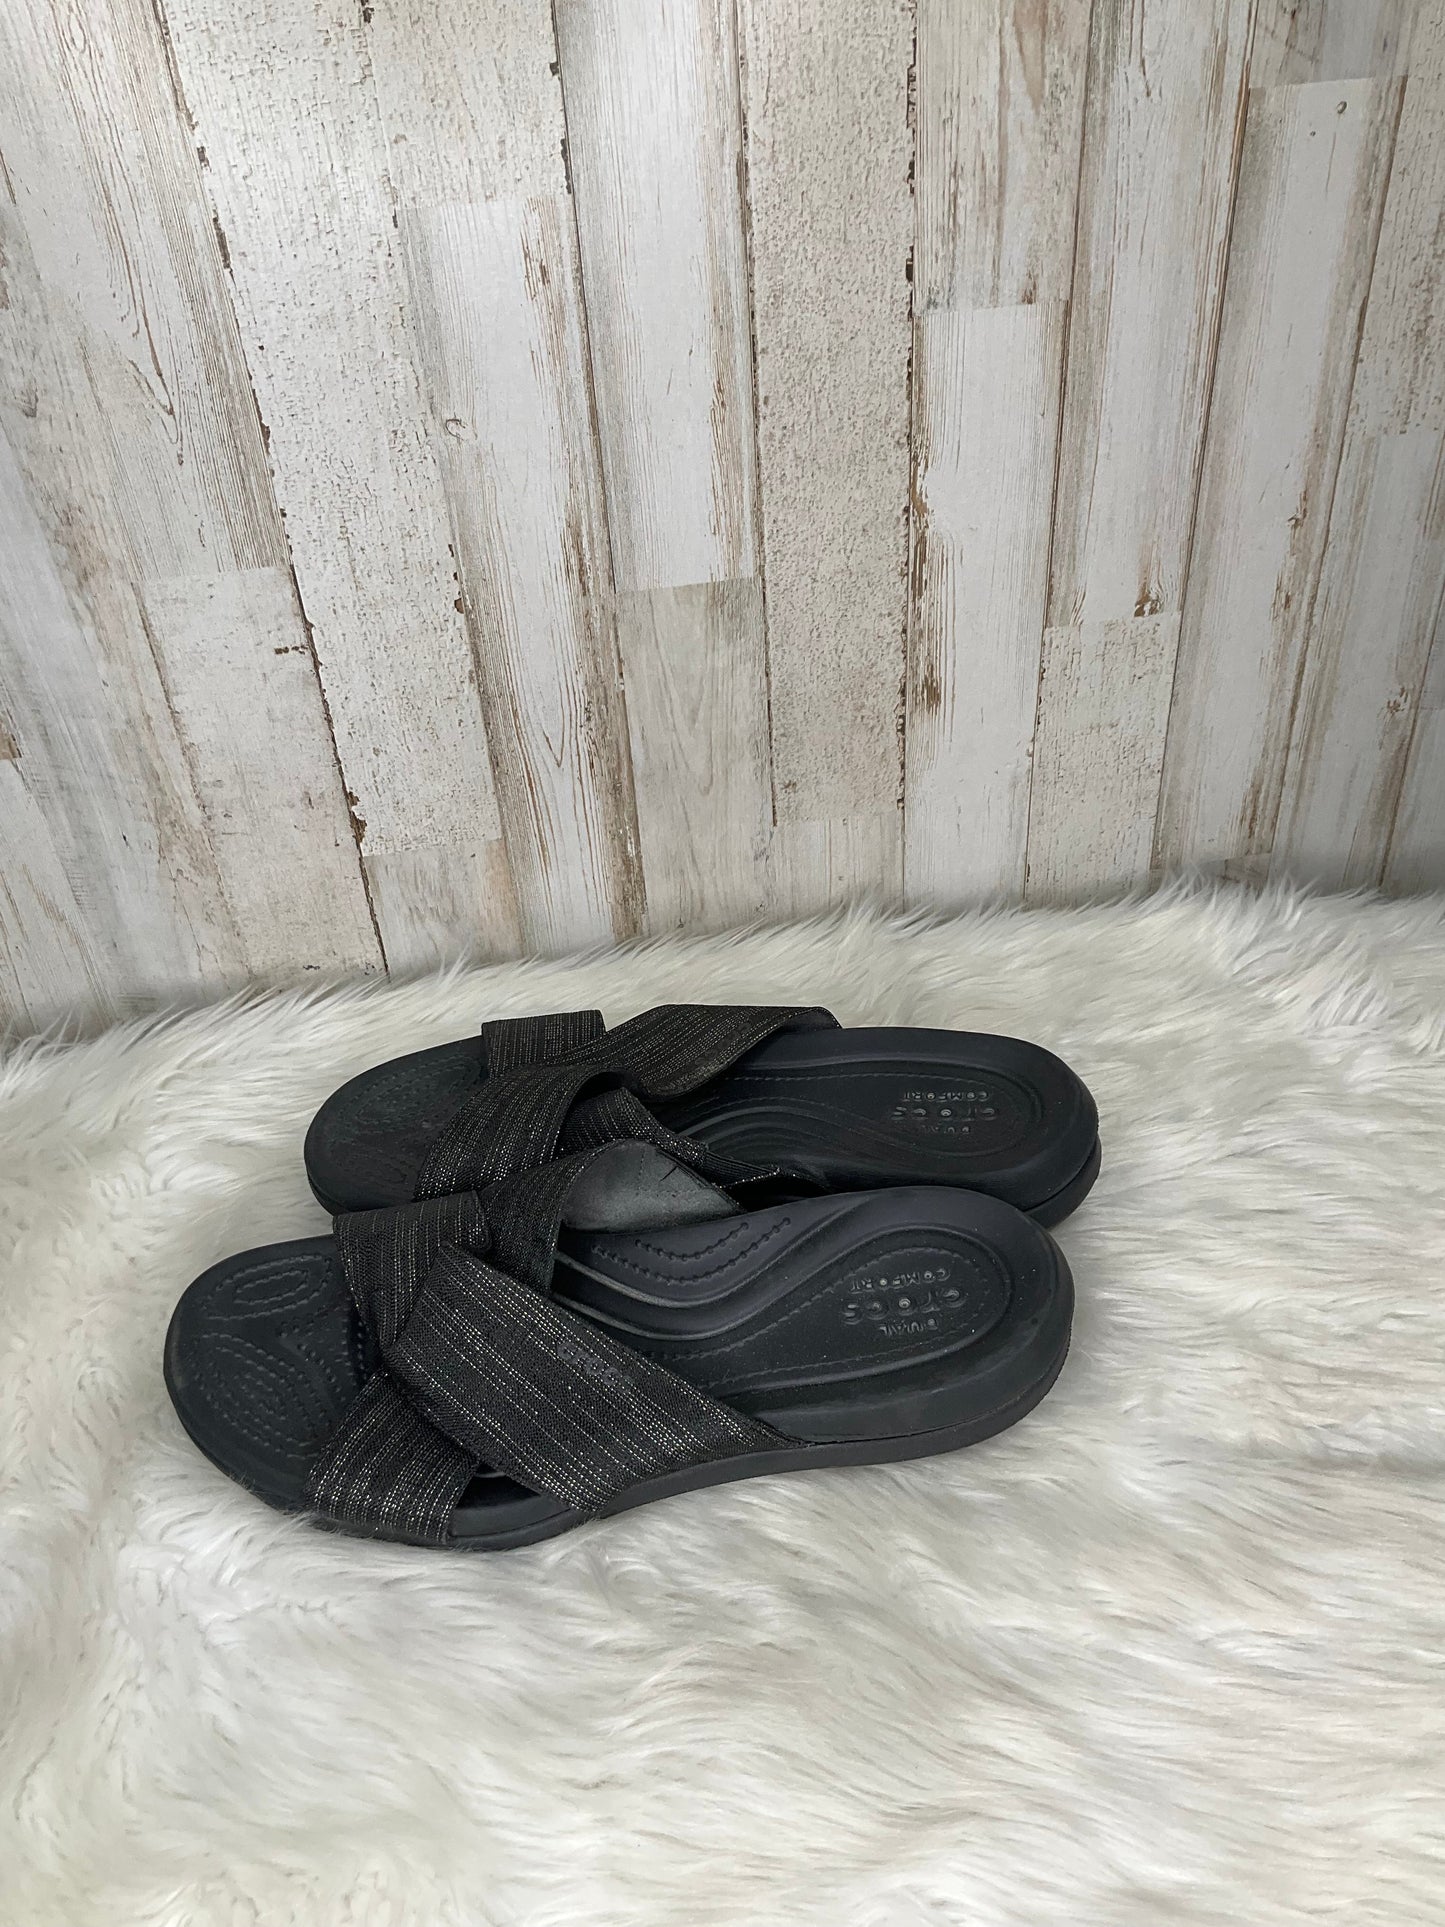 Black Sandals Heels Platform Crocs, Size 9